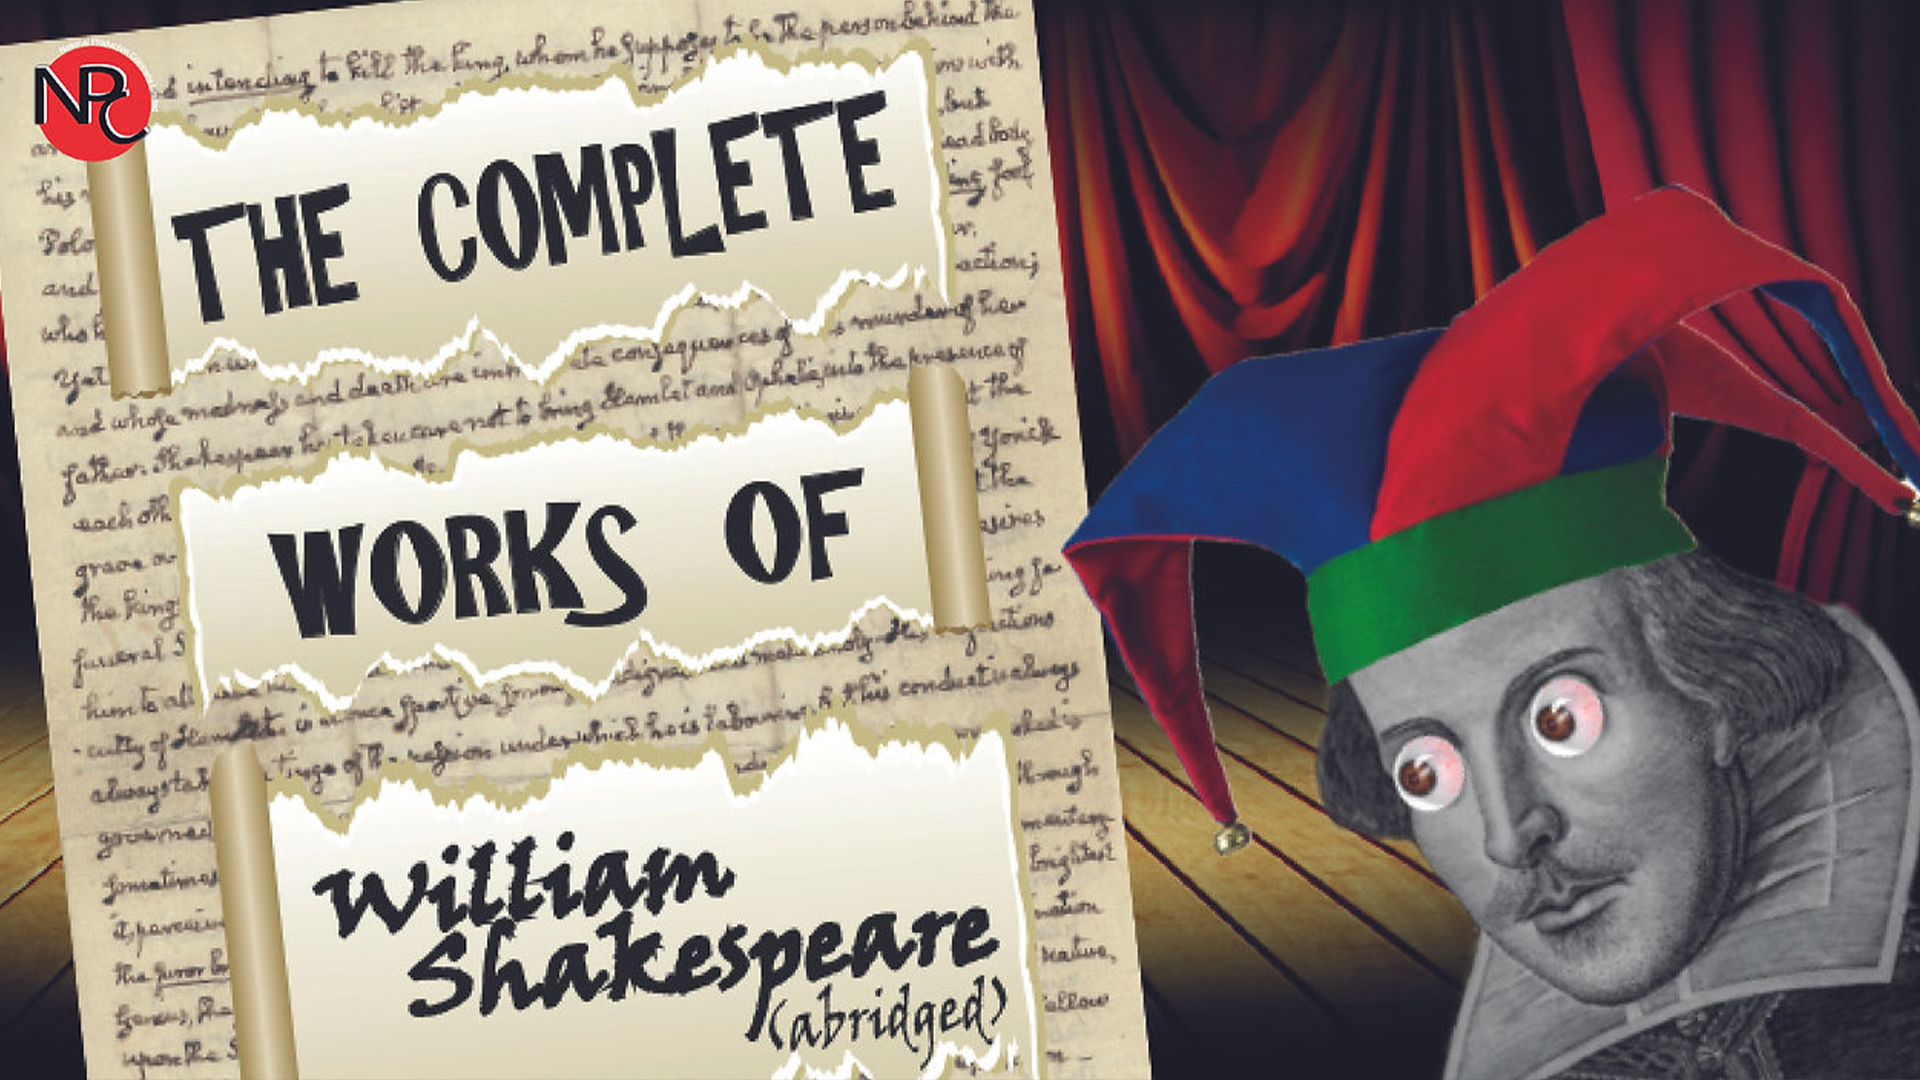 Complete Works of William Shakespeare (Abridged)